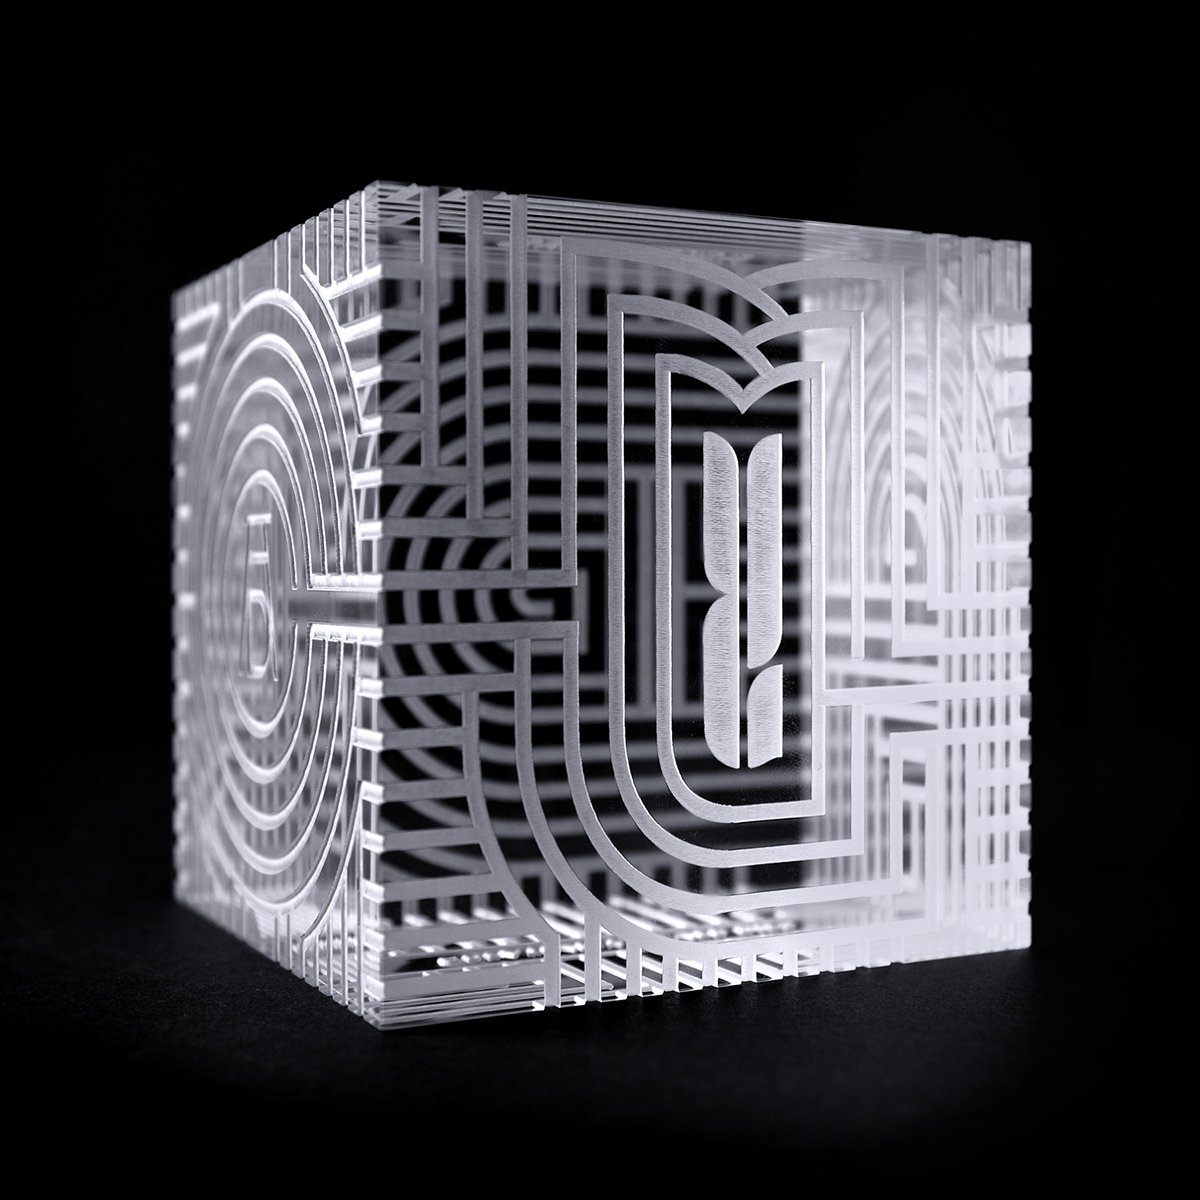 ADC Art Directors Art Directors Club Young Guns YG12 award cube Laser-Cut laser pattern geometric acrylic trophy